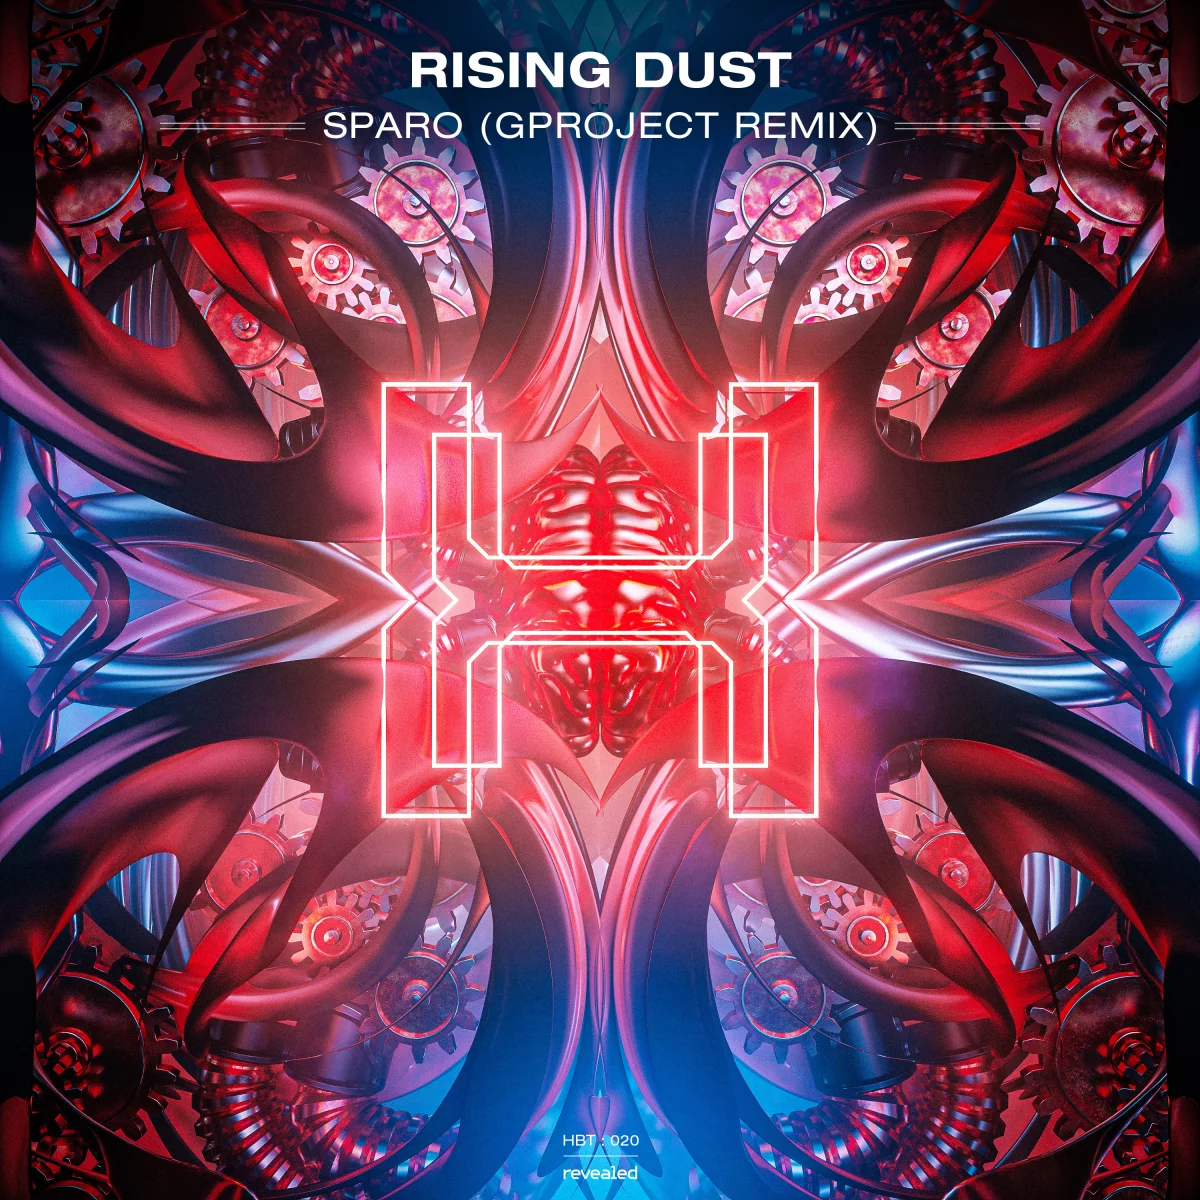 Sparo (Gproject Remix) - Rising Dust⁠